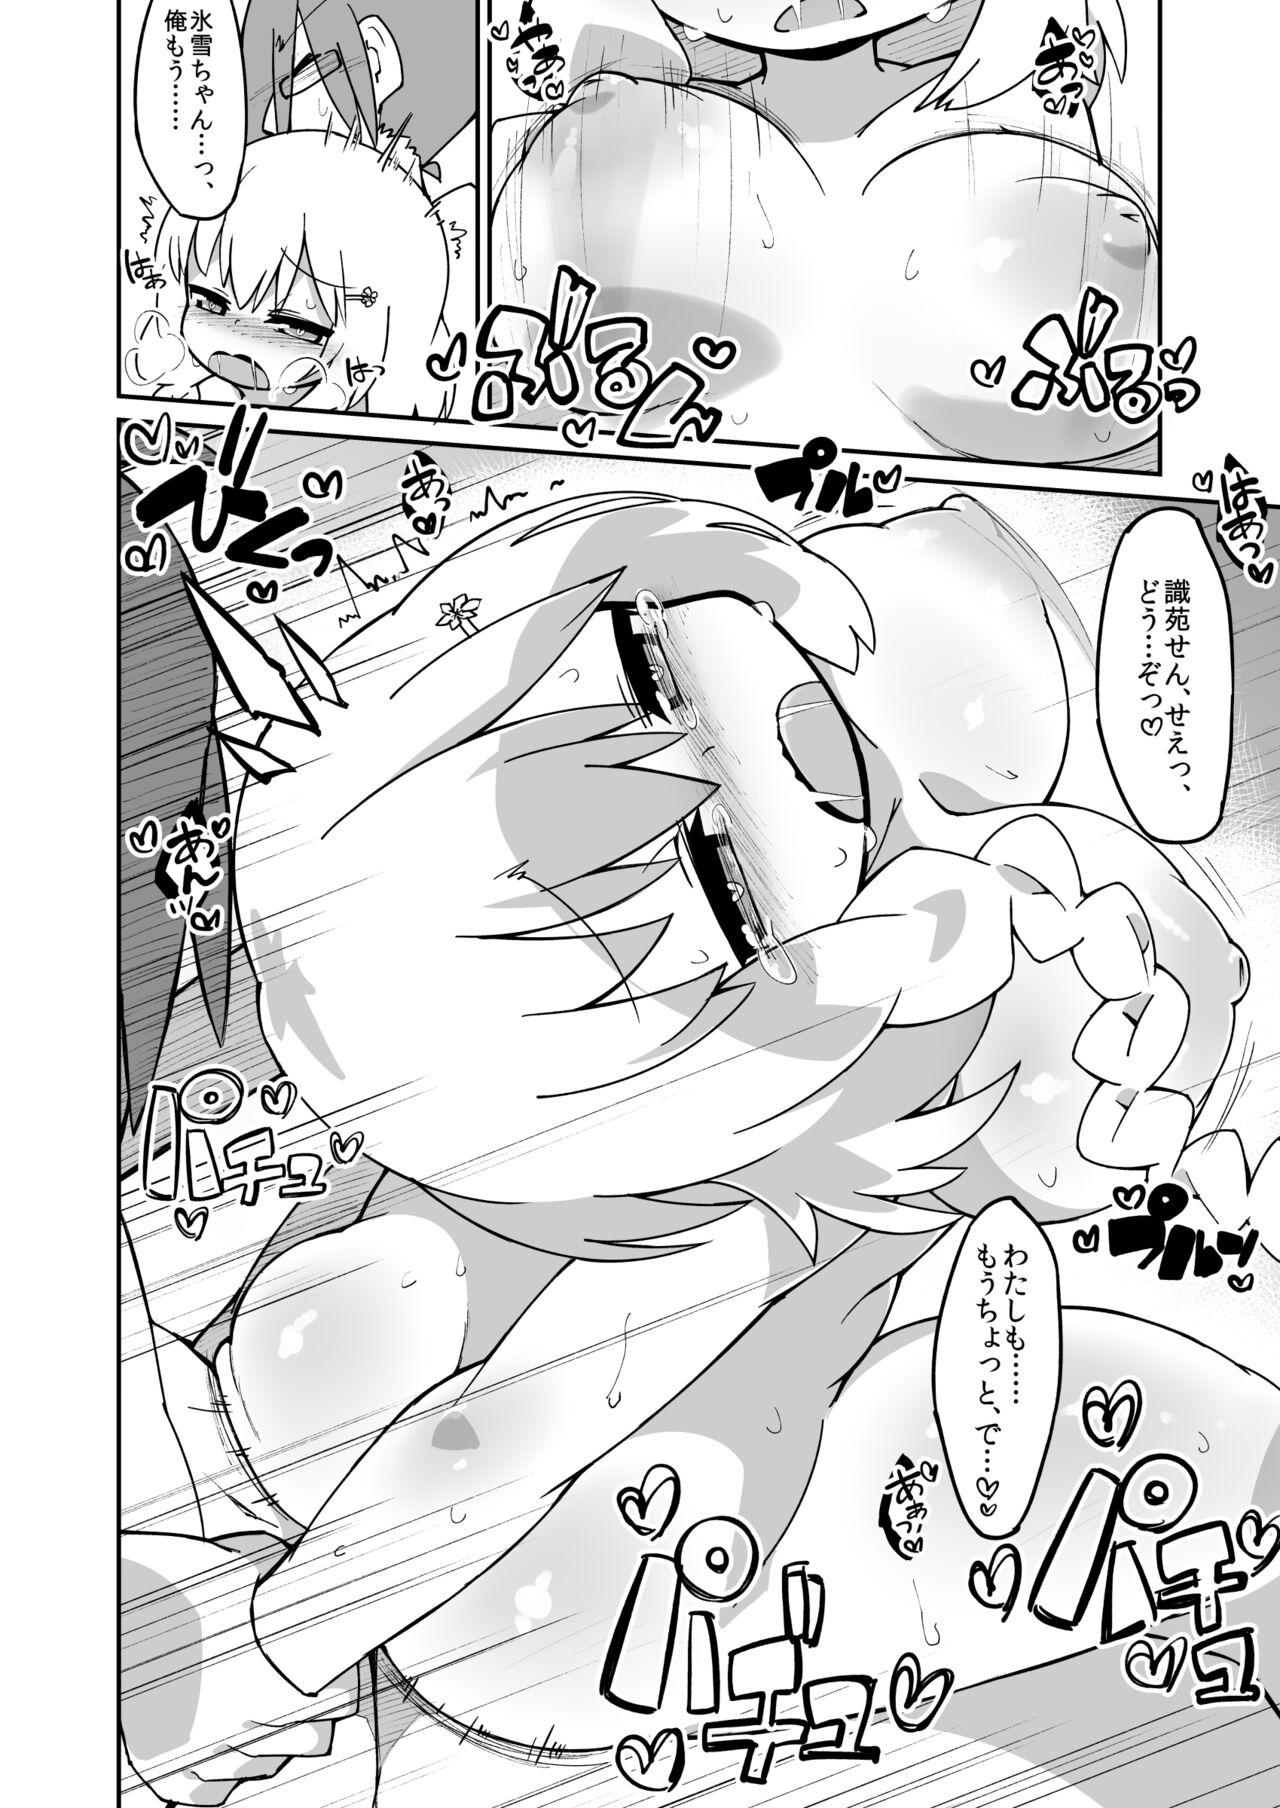 She Hiyuki-chan Ecchi Manga - Sound voltex Family Porn - Page 4